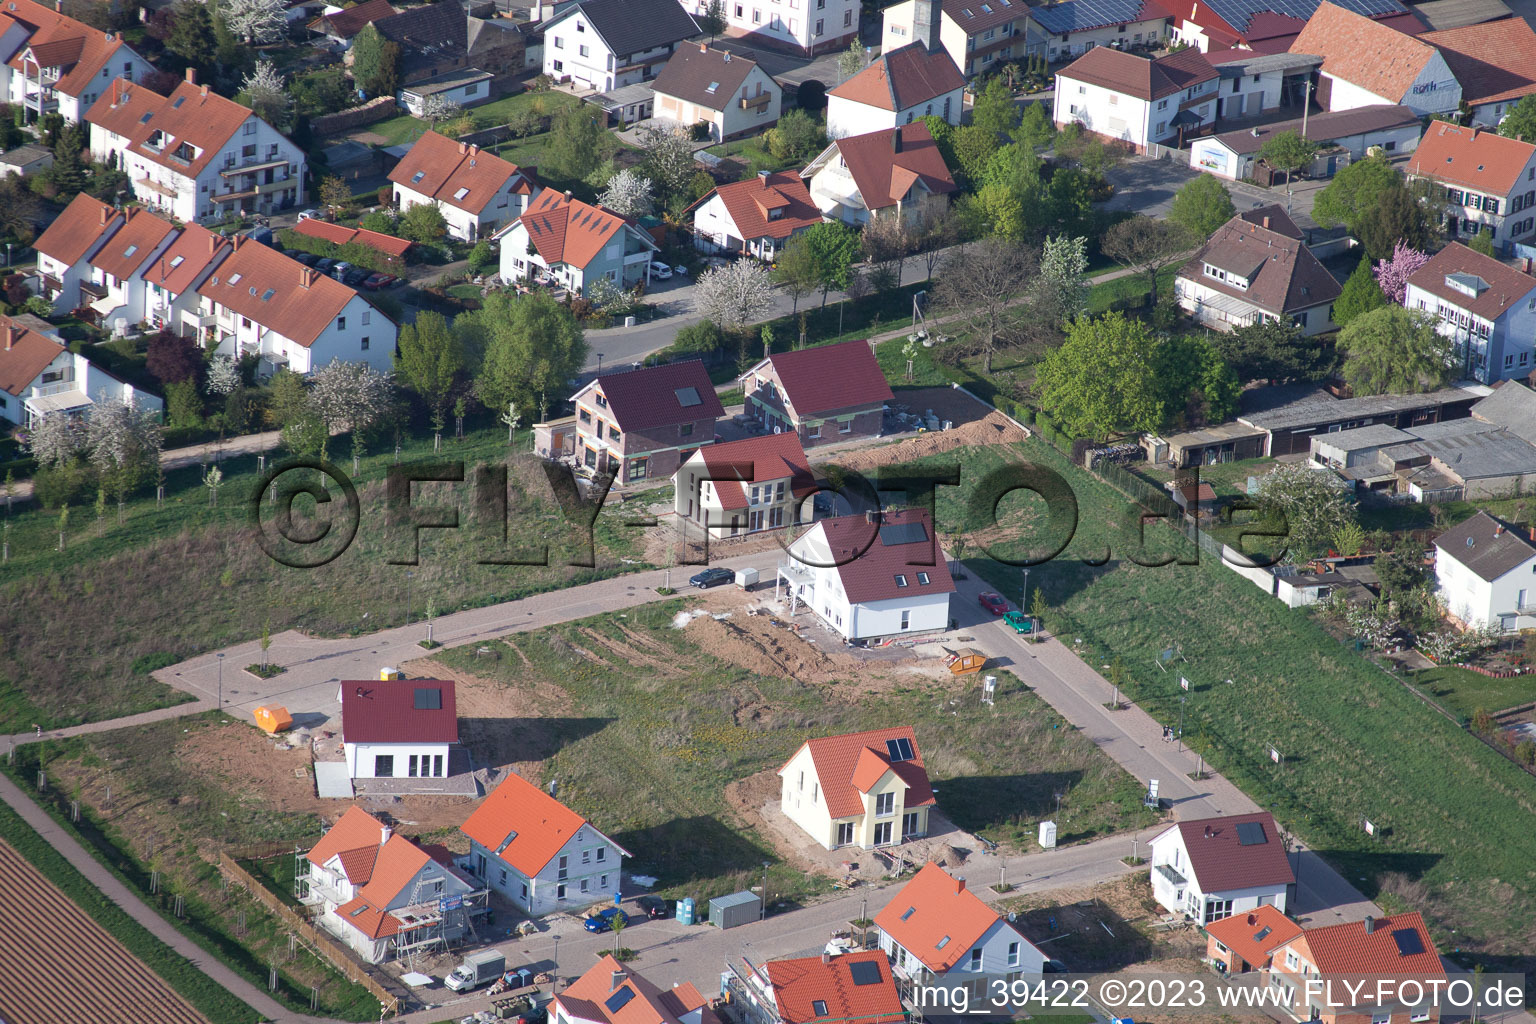 District Mörlheim in Landau in der Pfalz in the state Rhineland-Palatinate, Germany seen from above